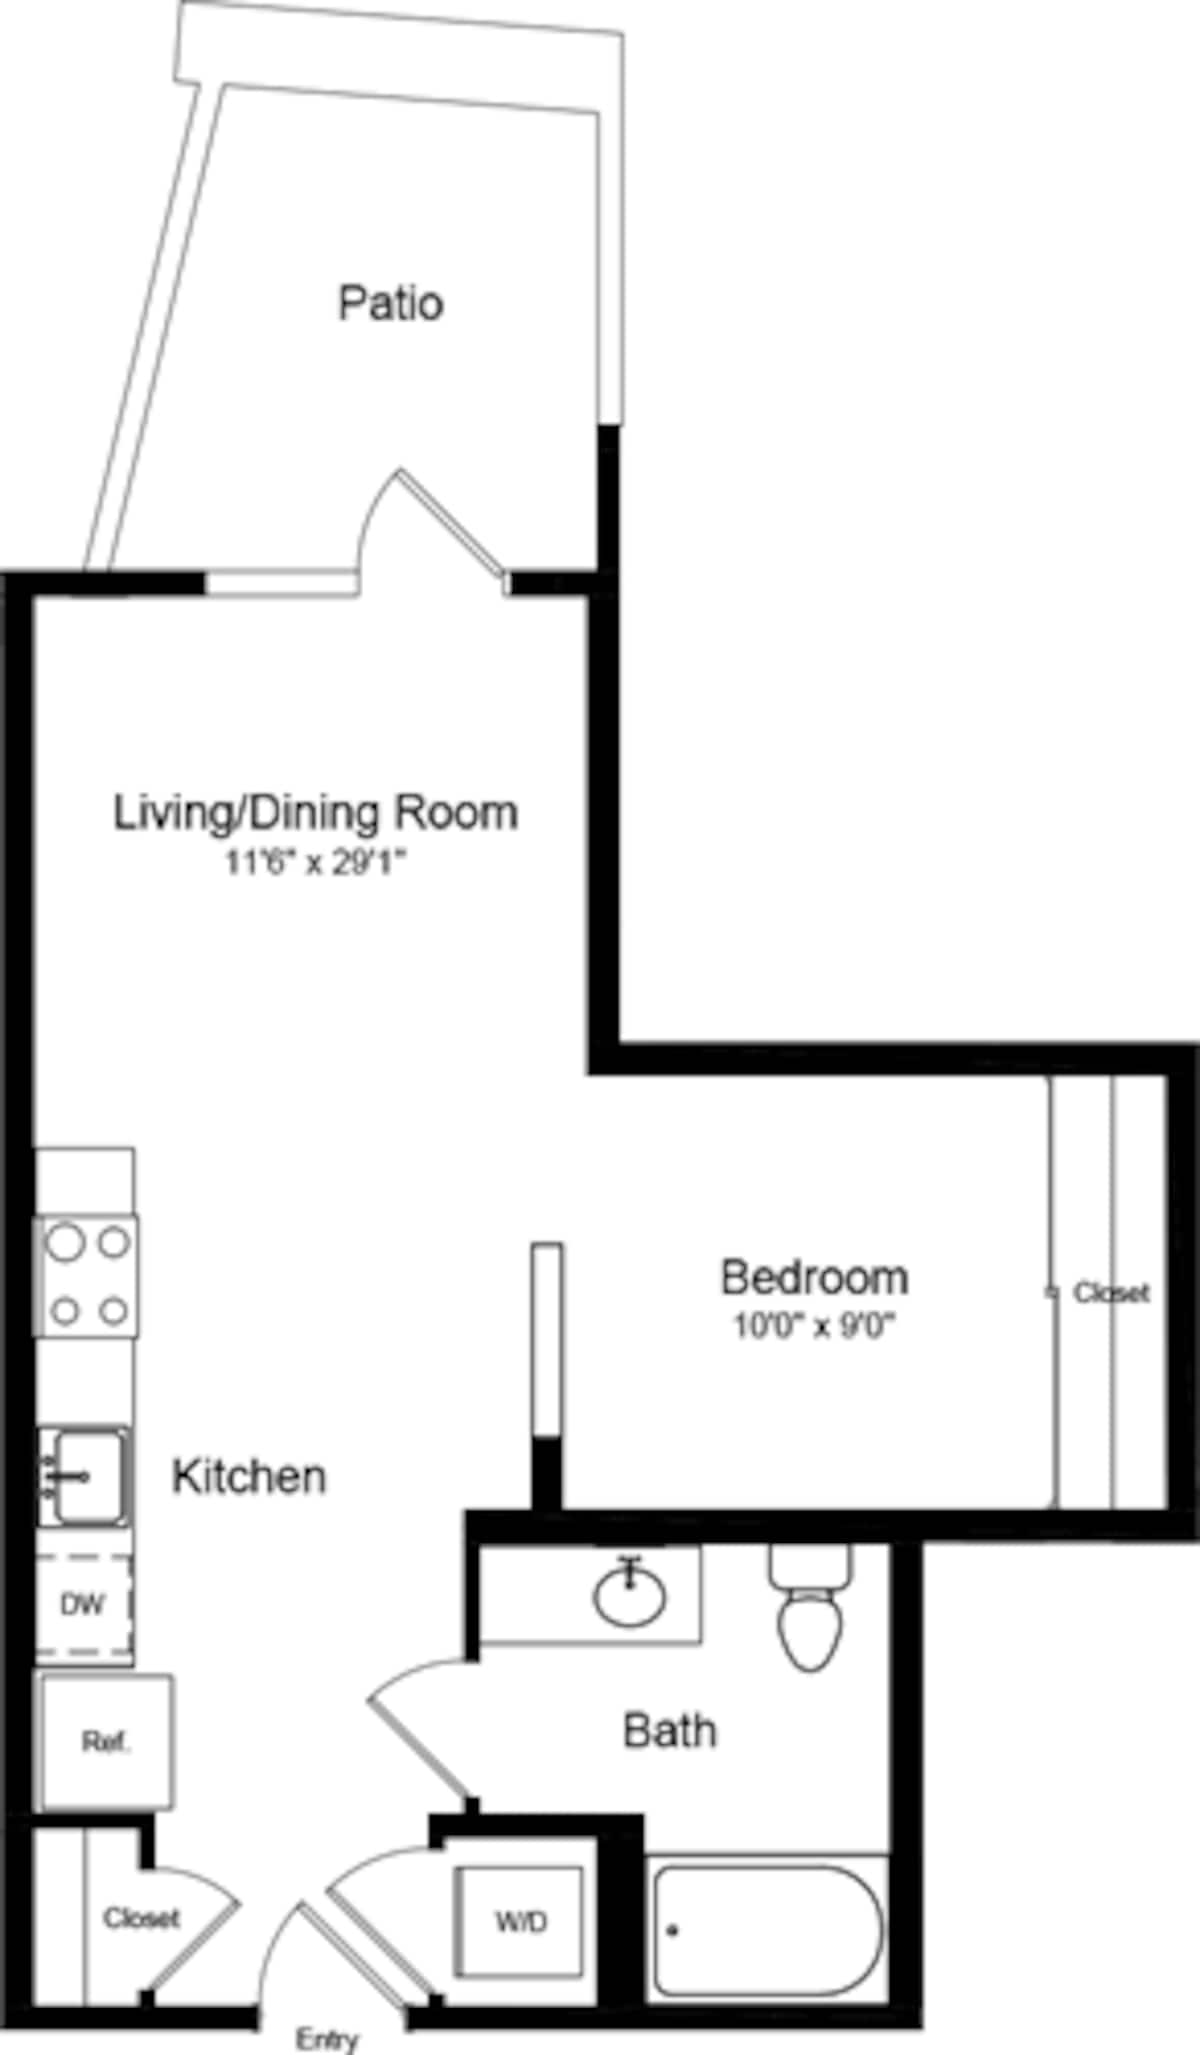 Floorplan diagram for S1 with Patio, showing 1 bedroom